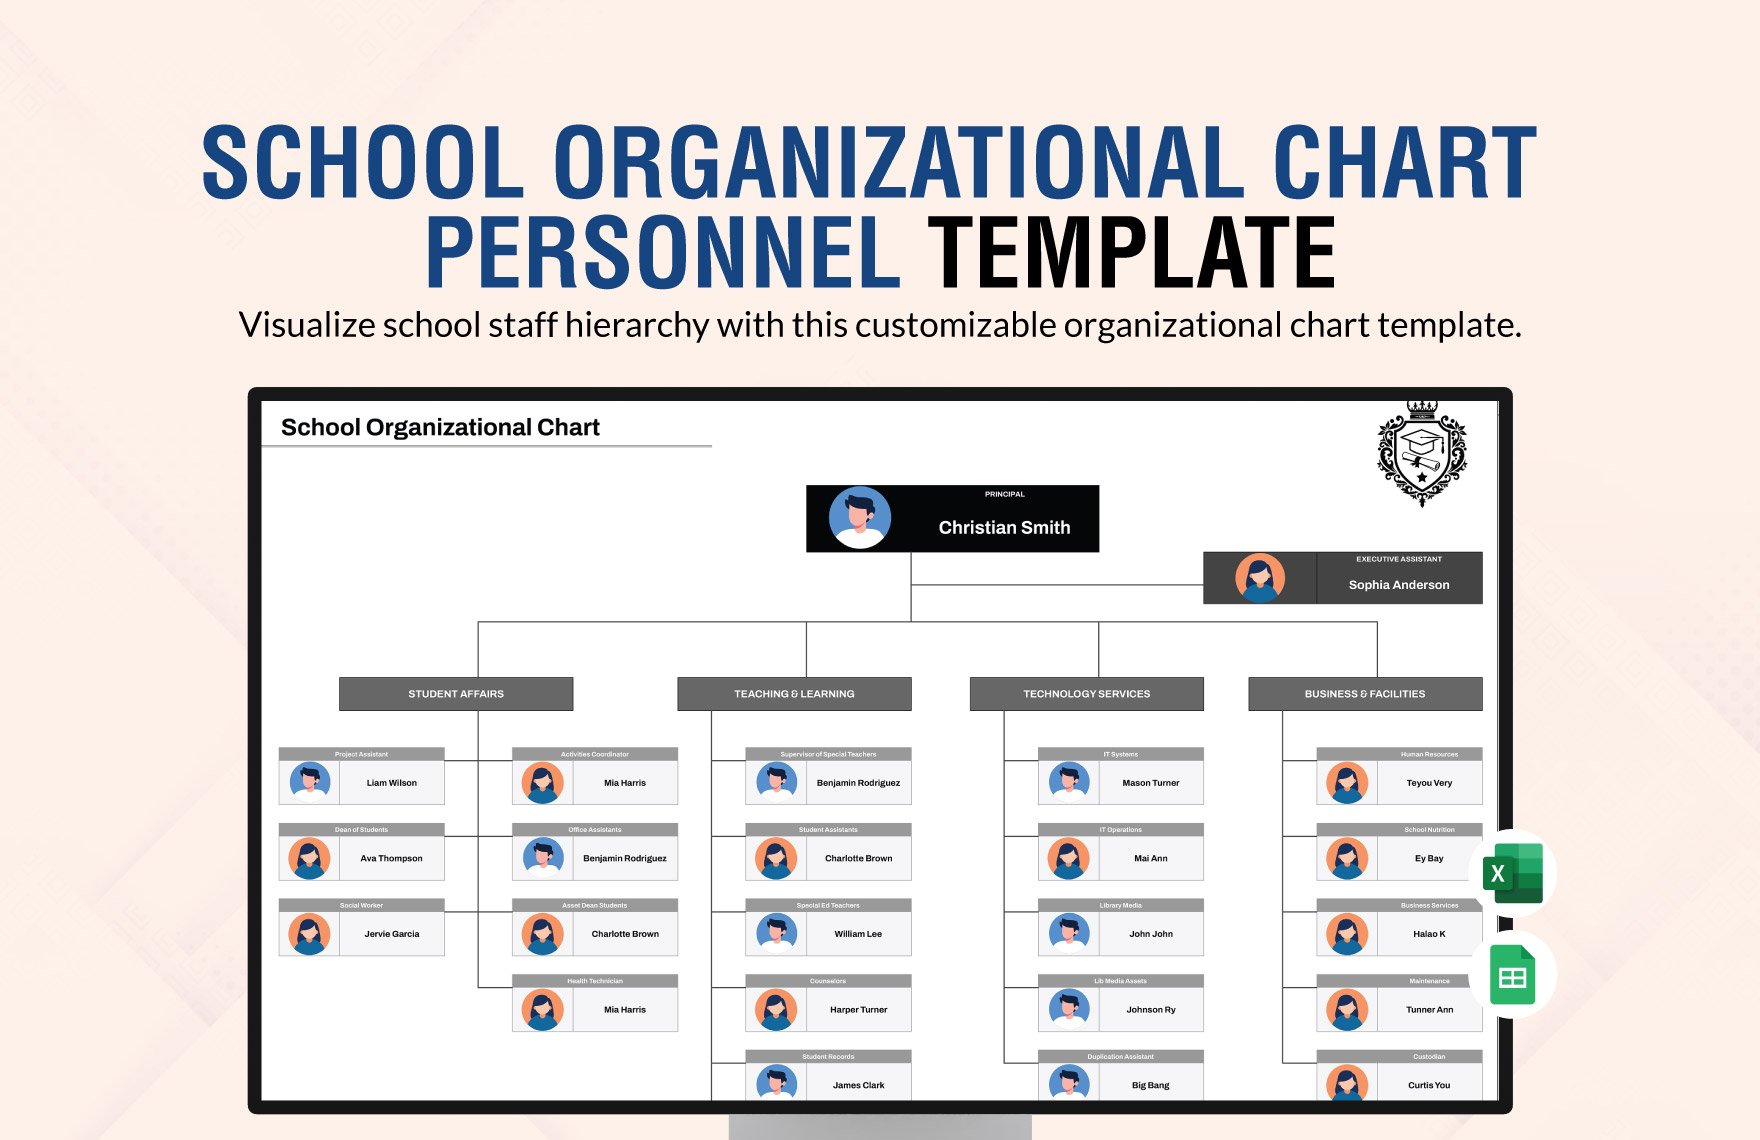 School Organizational Chart Personnel Template